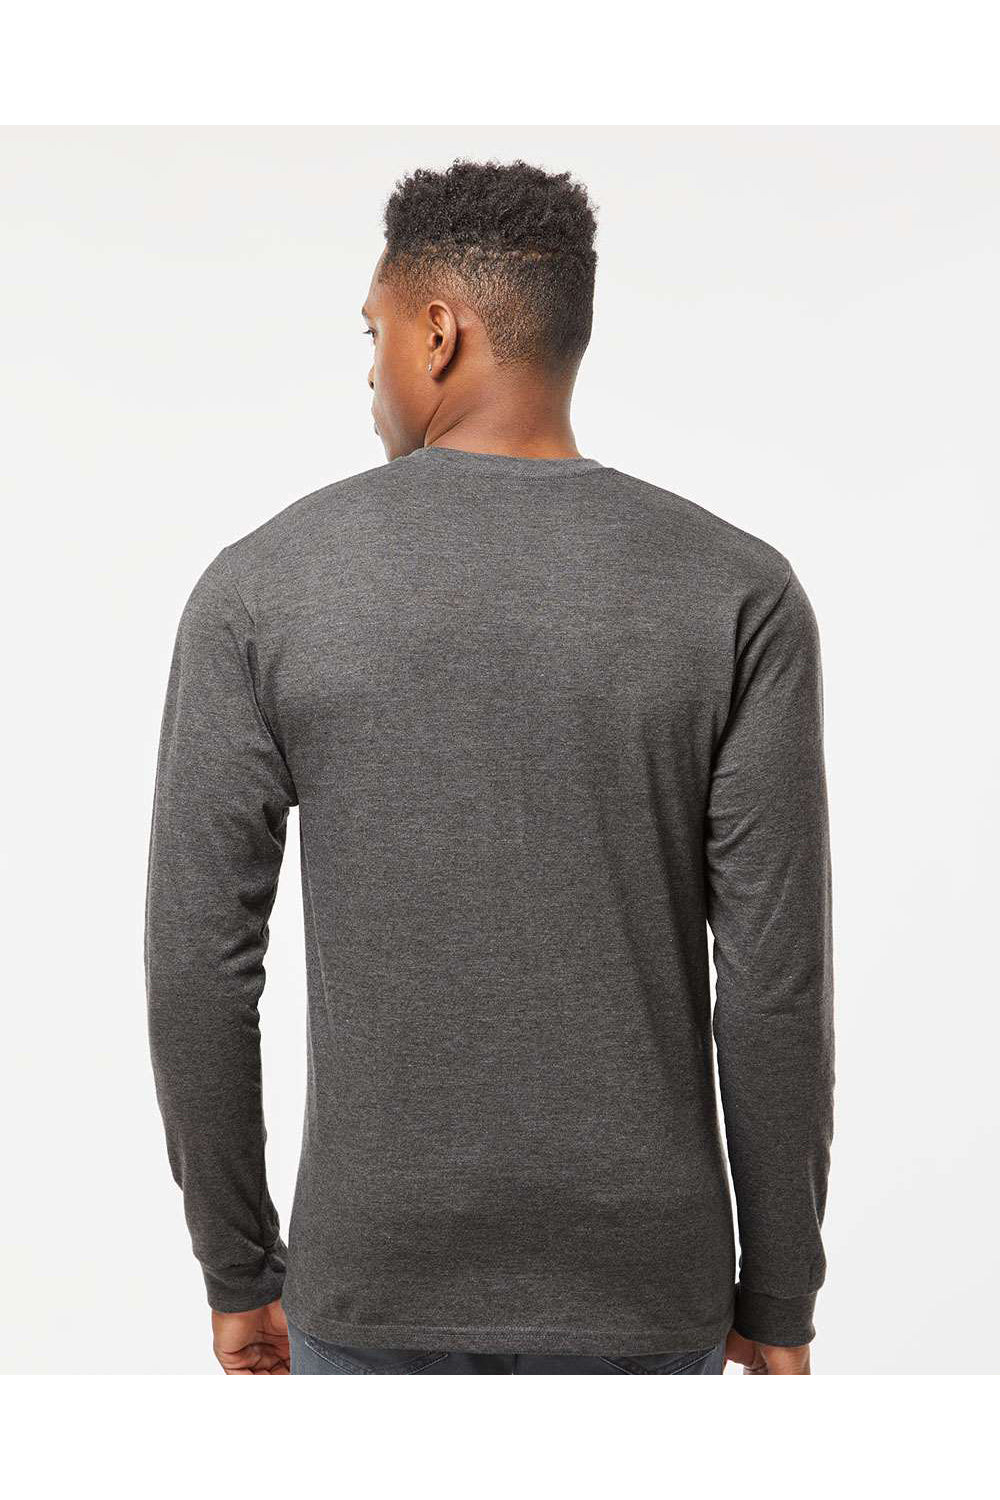 Tultex 291 Mens Jersey Long Sleeve Crewneck T-Shirt Heather Charcoal Grey Model Back